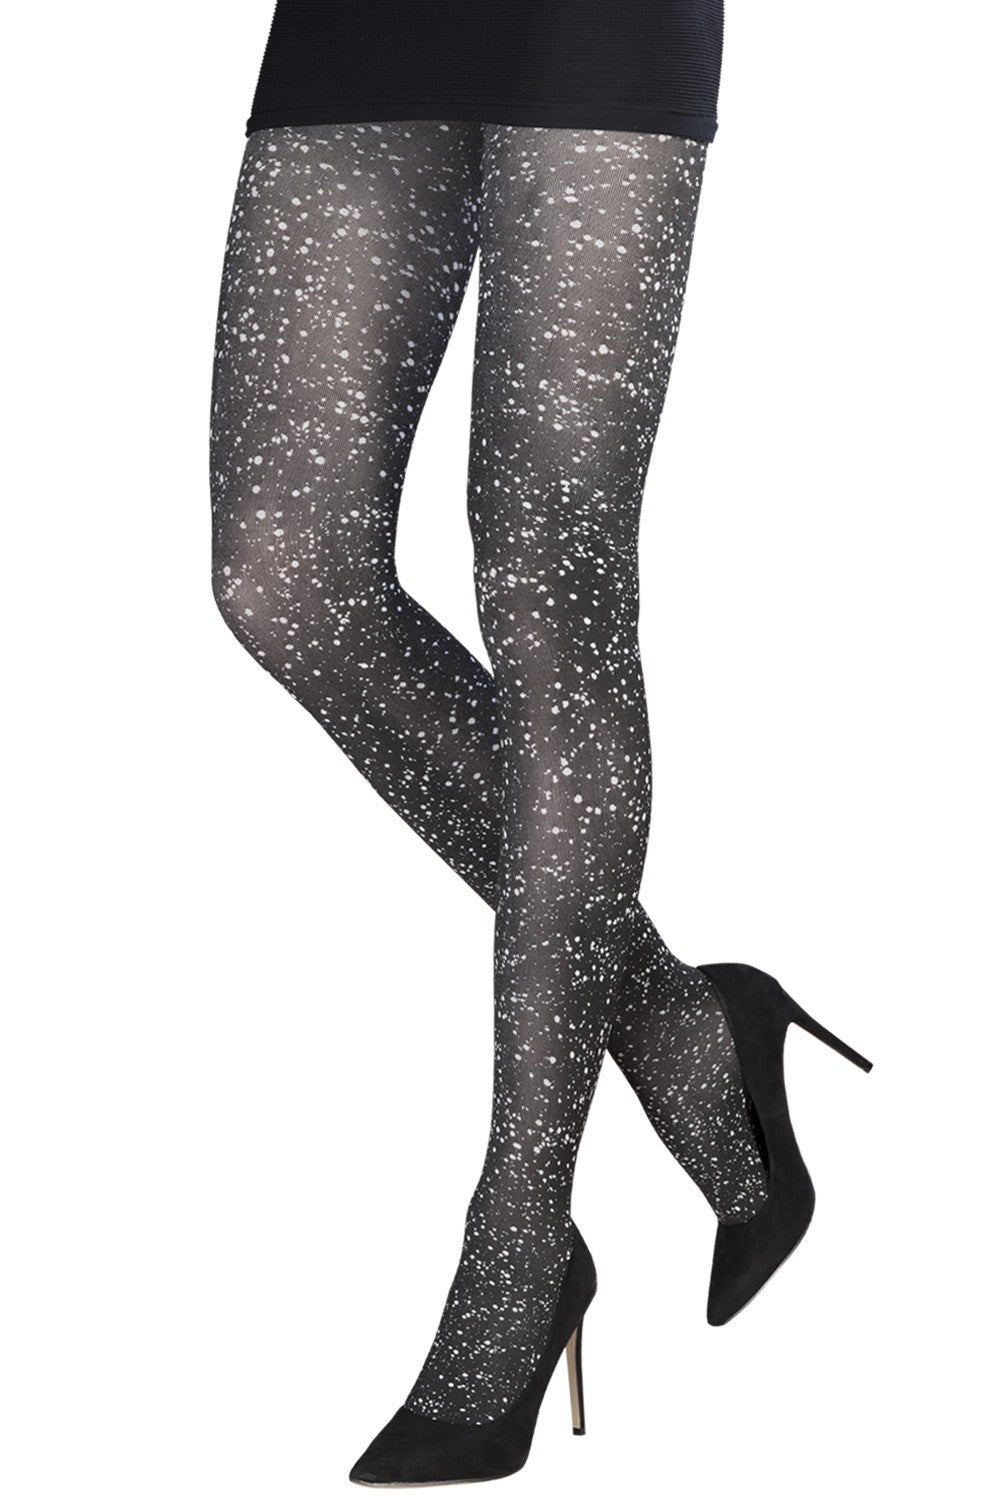 Emilio Cavallini 2488.1.53 Constelation Tights - black opaque tights with white paint splatter splash style pattern